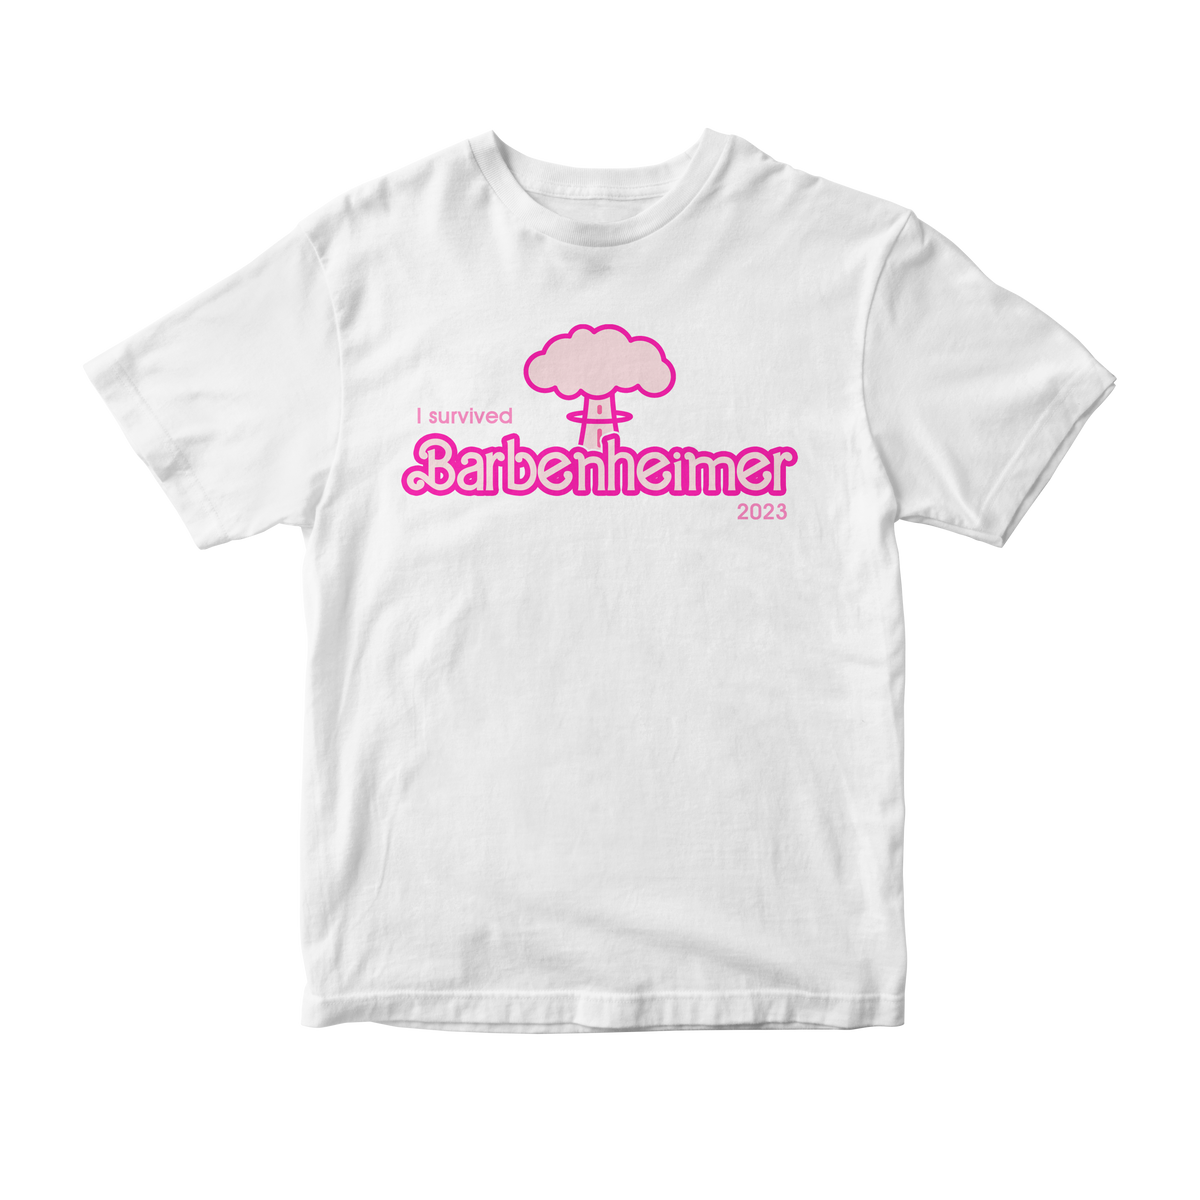 Nome do produto: Camiseta Barbenheimer 2023 (Barbie x Oppenheimer)